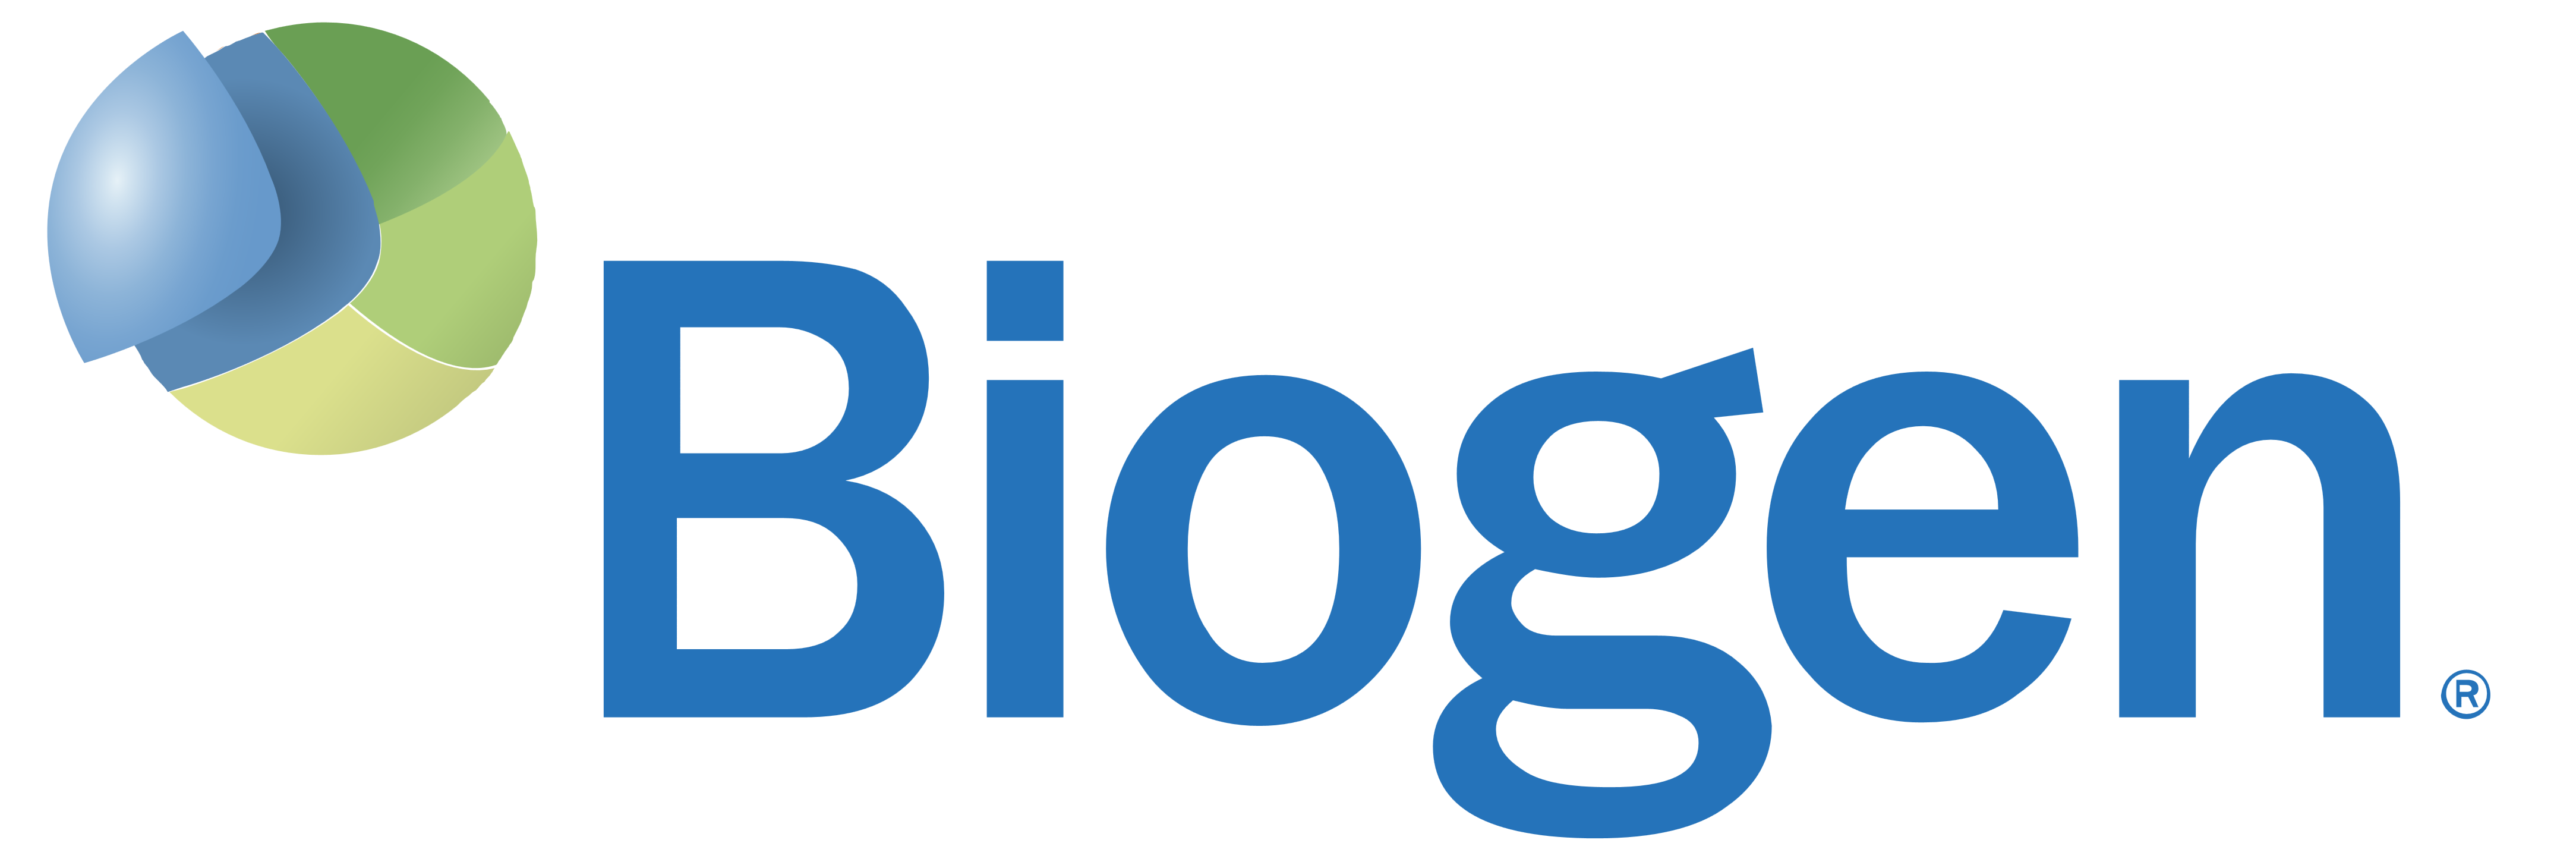 Biogen_logo_logotype_symbol